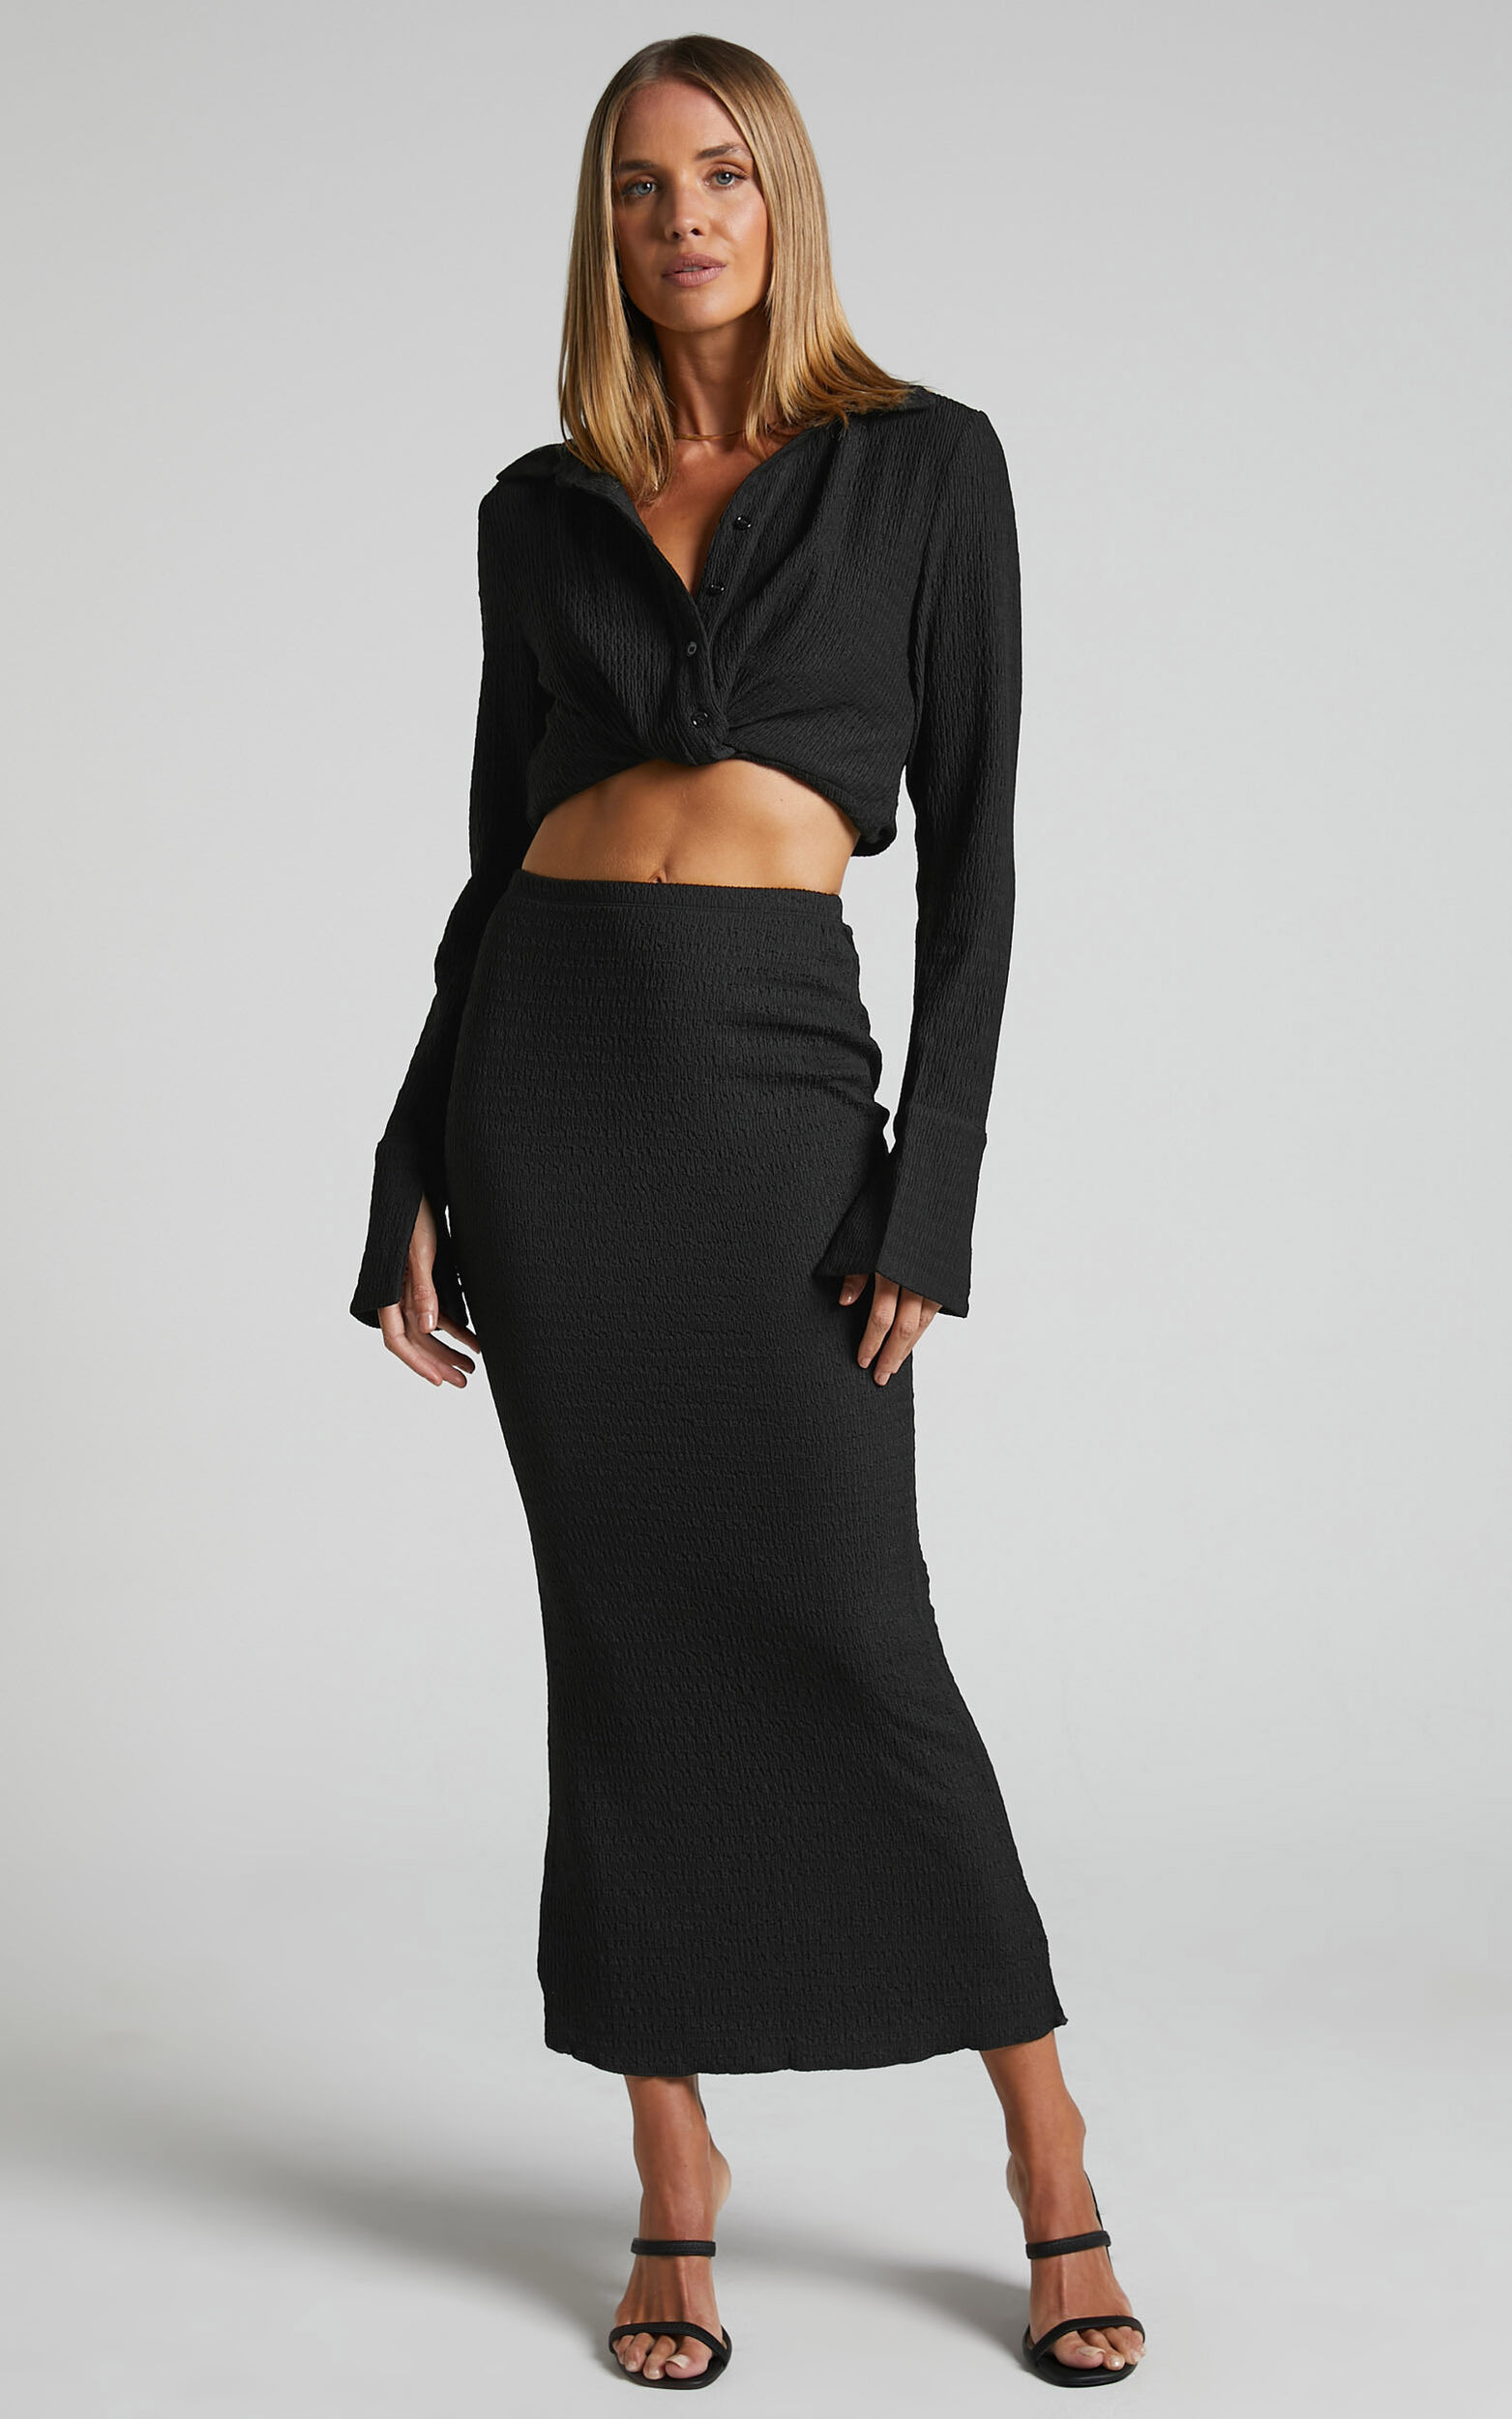 Althea Midi Skirt - Mermaid Skirt in Black - 06, BLK1